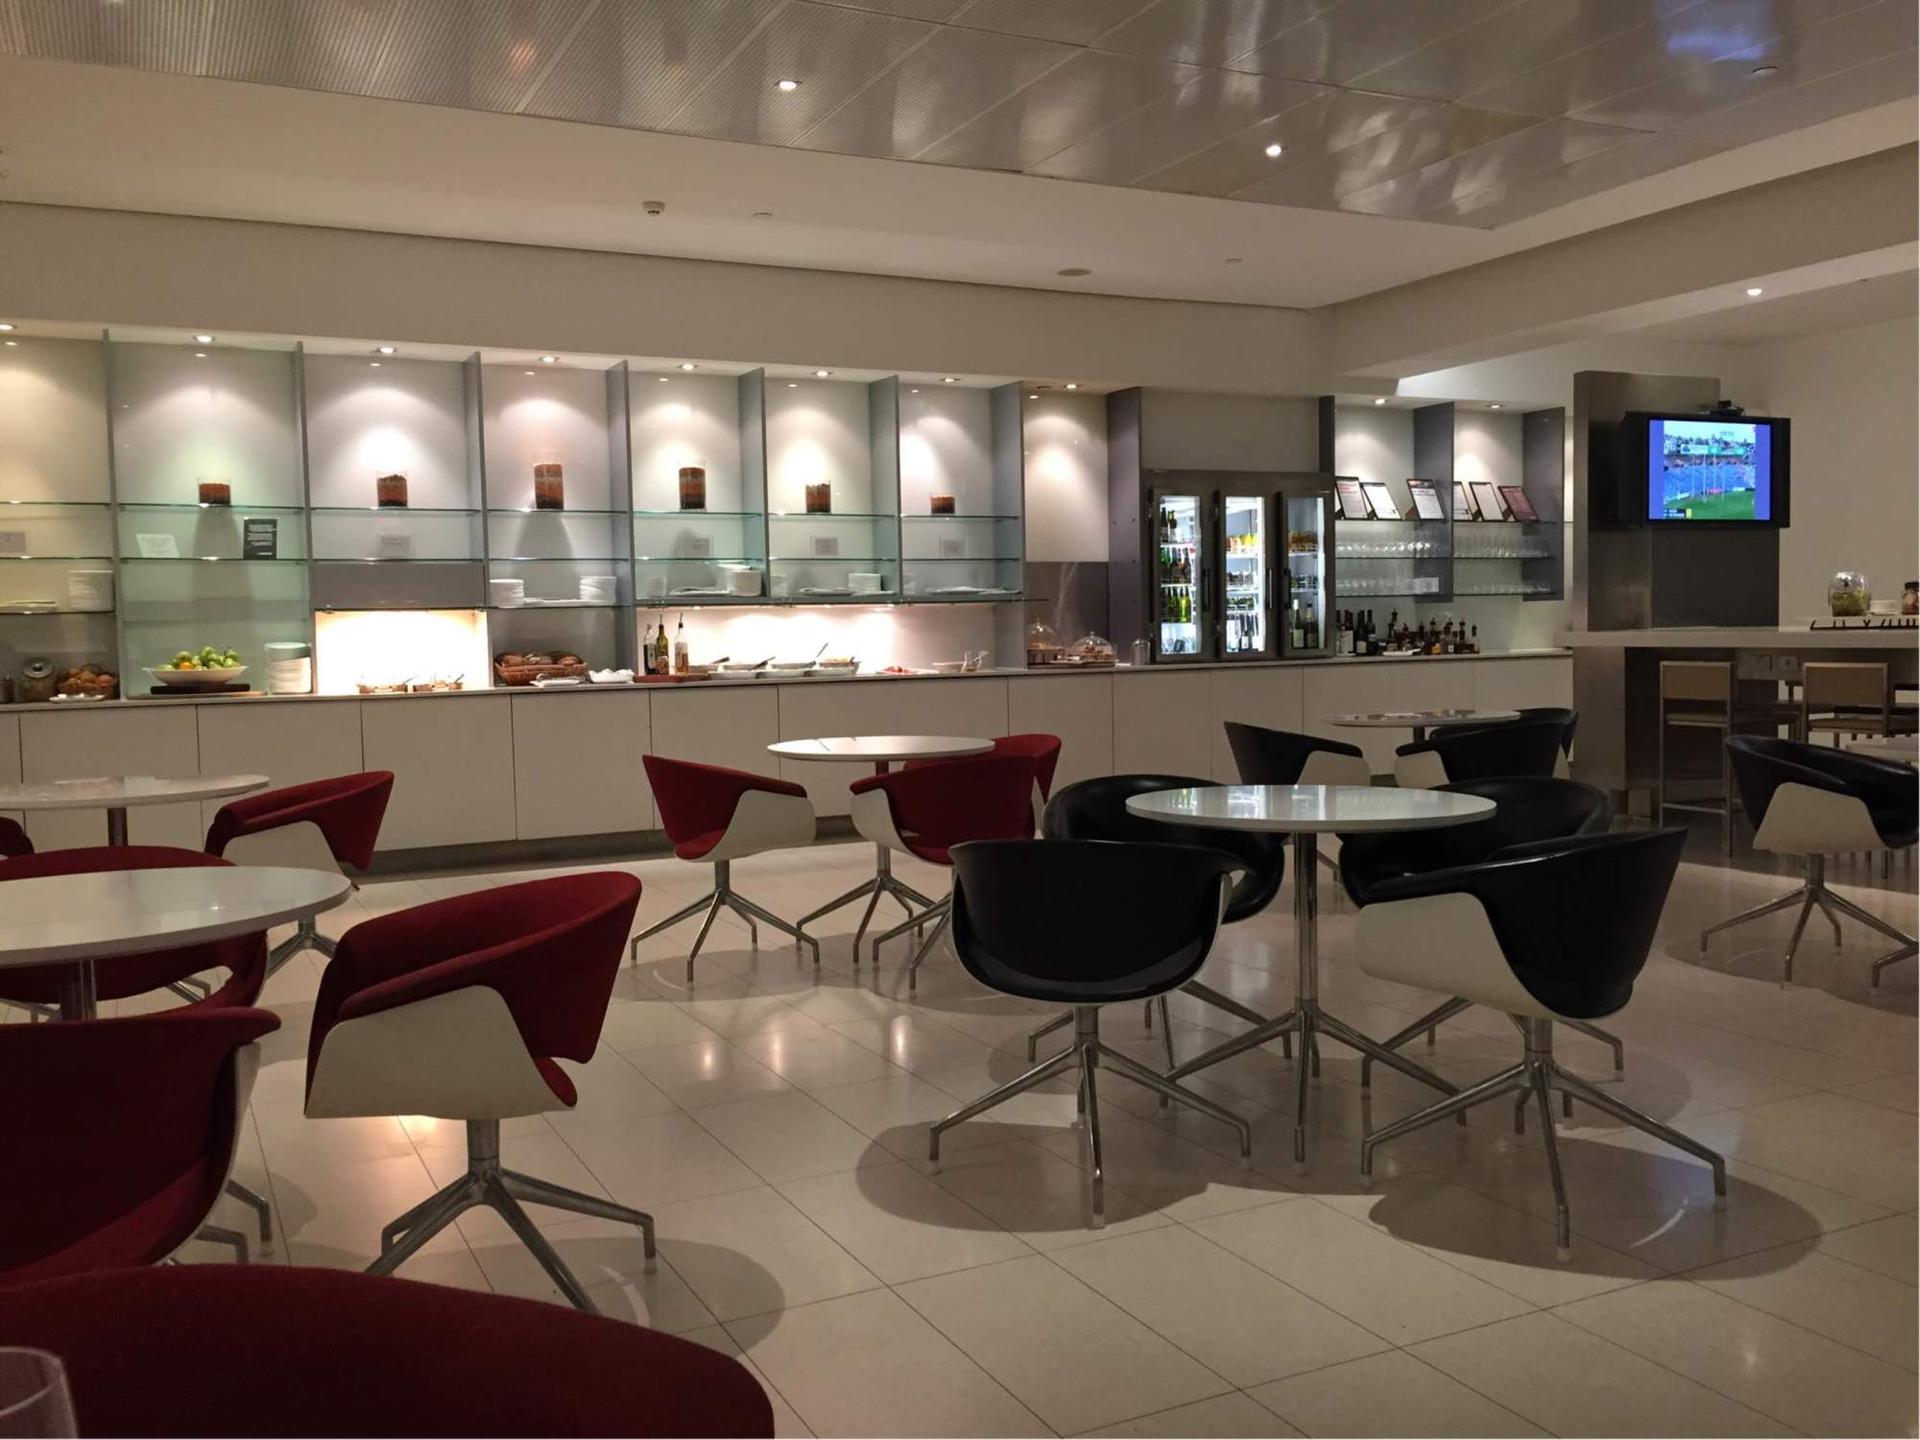 Qantas Airways International Business Lounge image 3 of 17